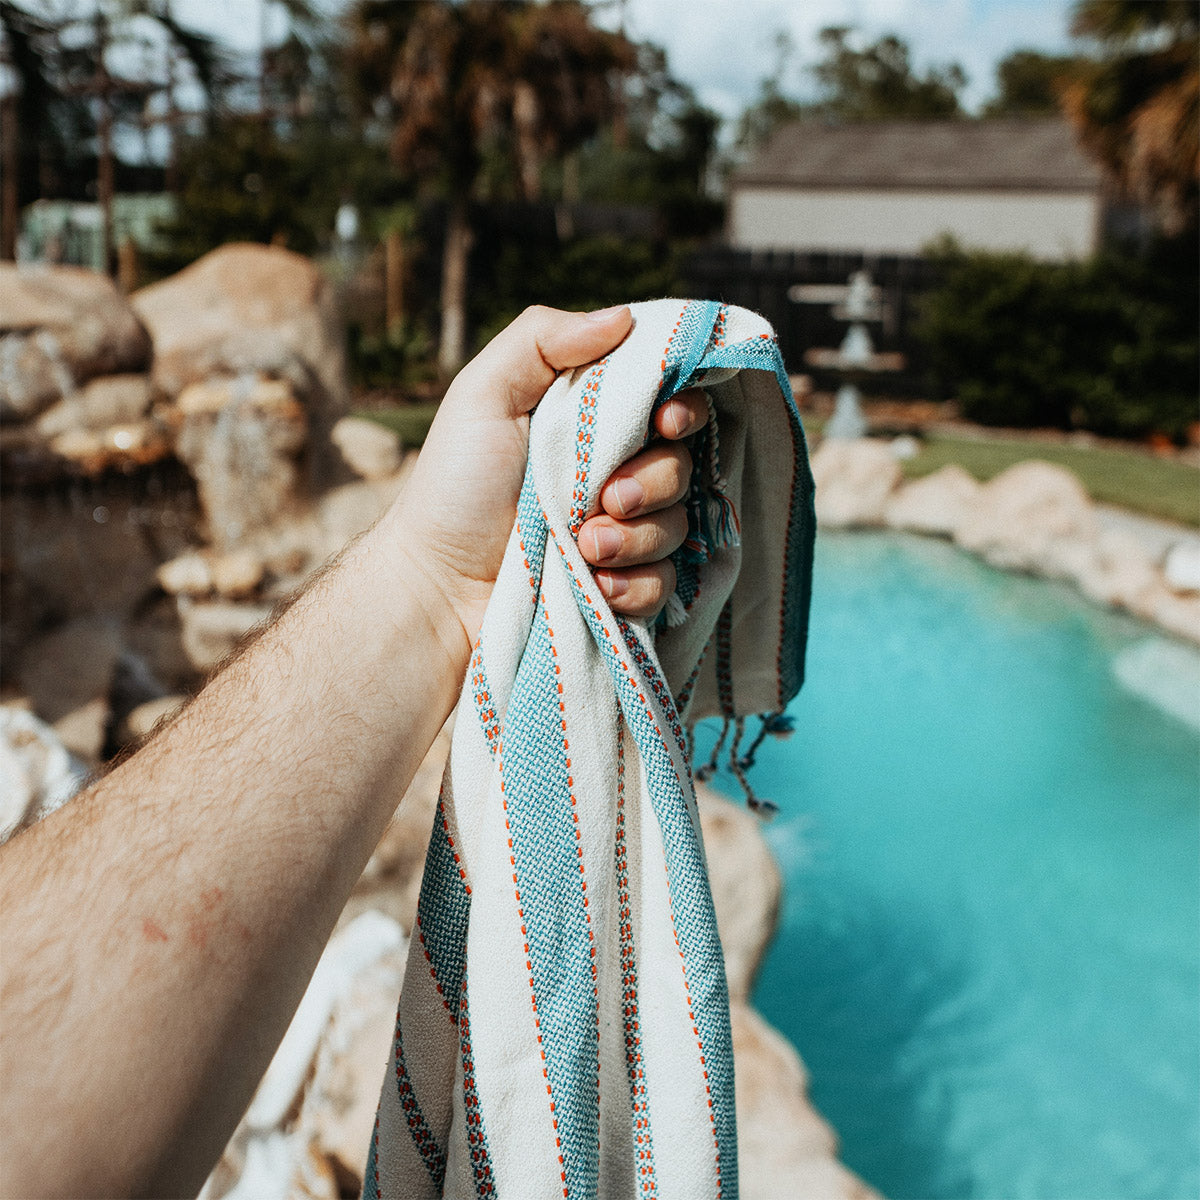 Pool Towels - The Turkish Towel Company